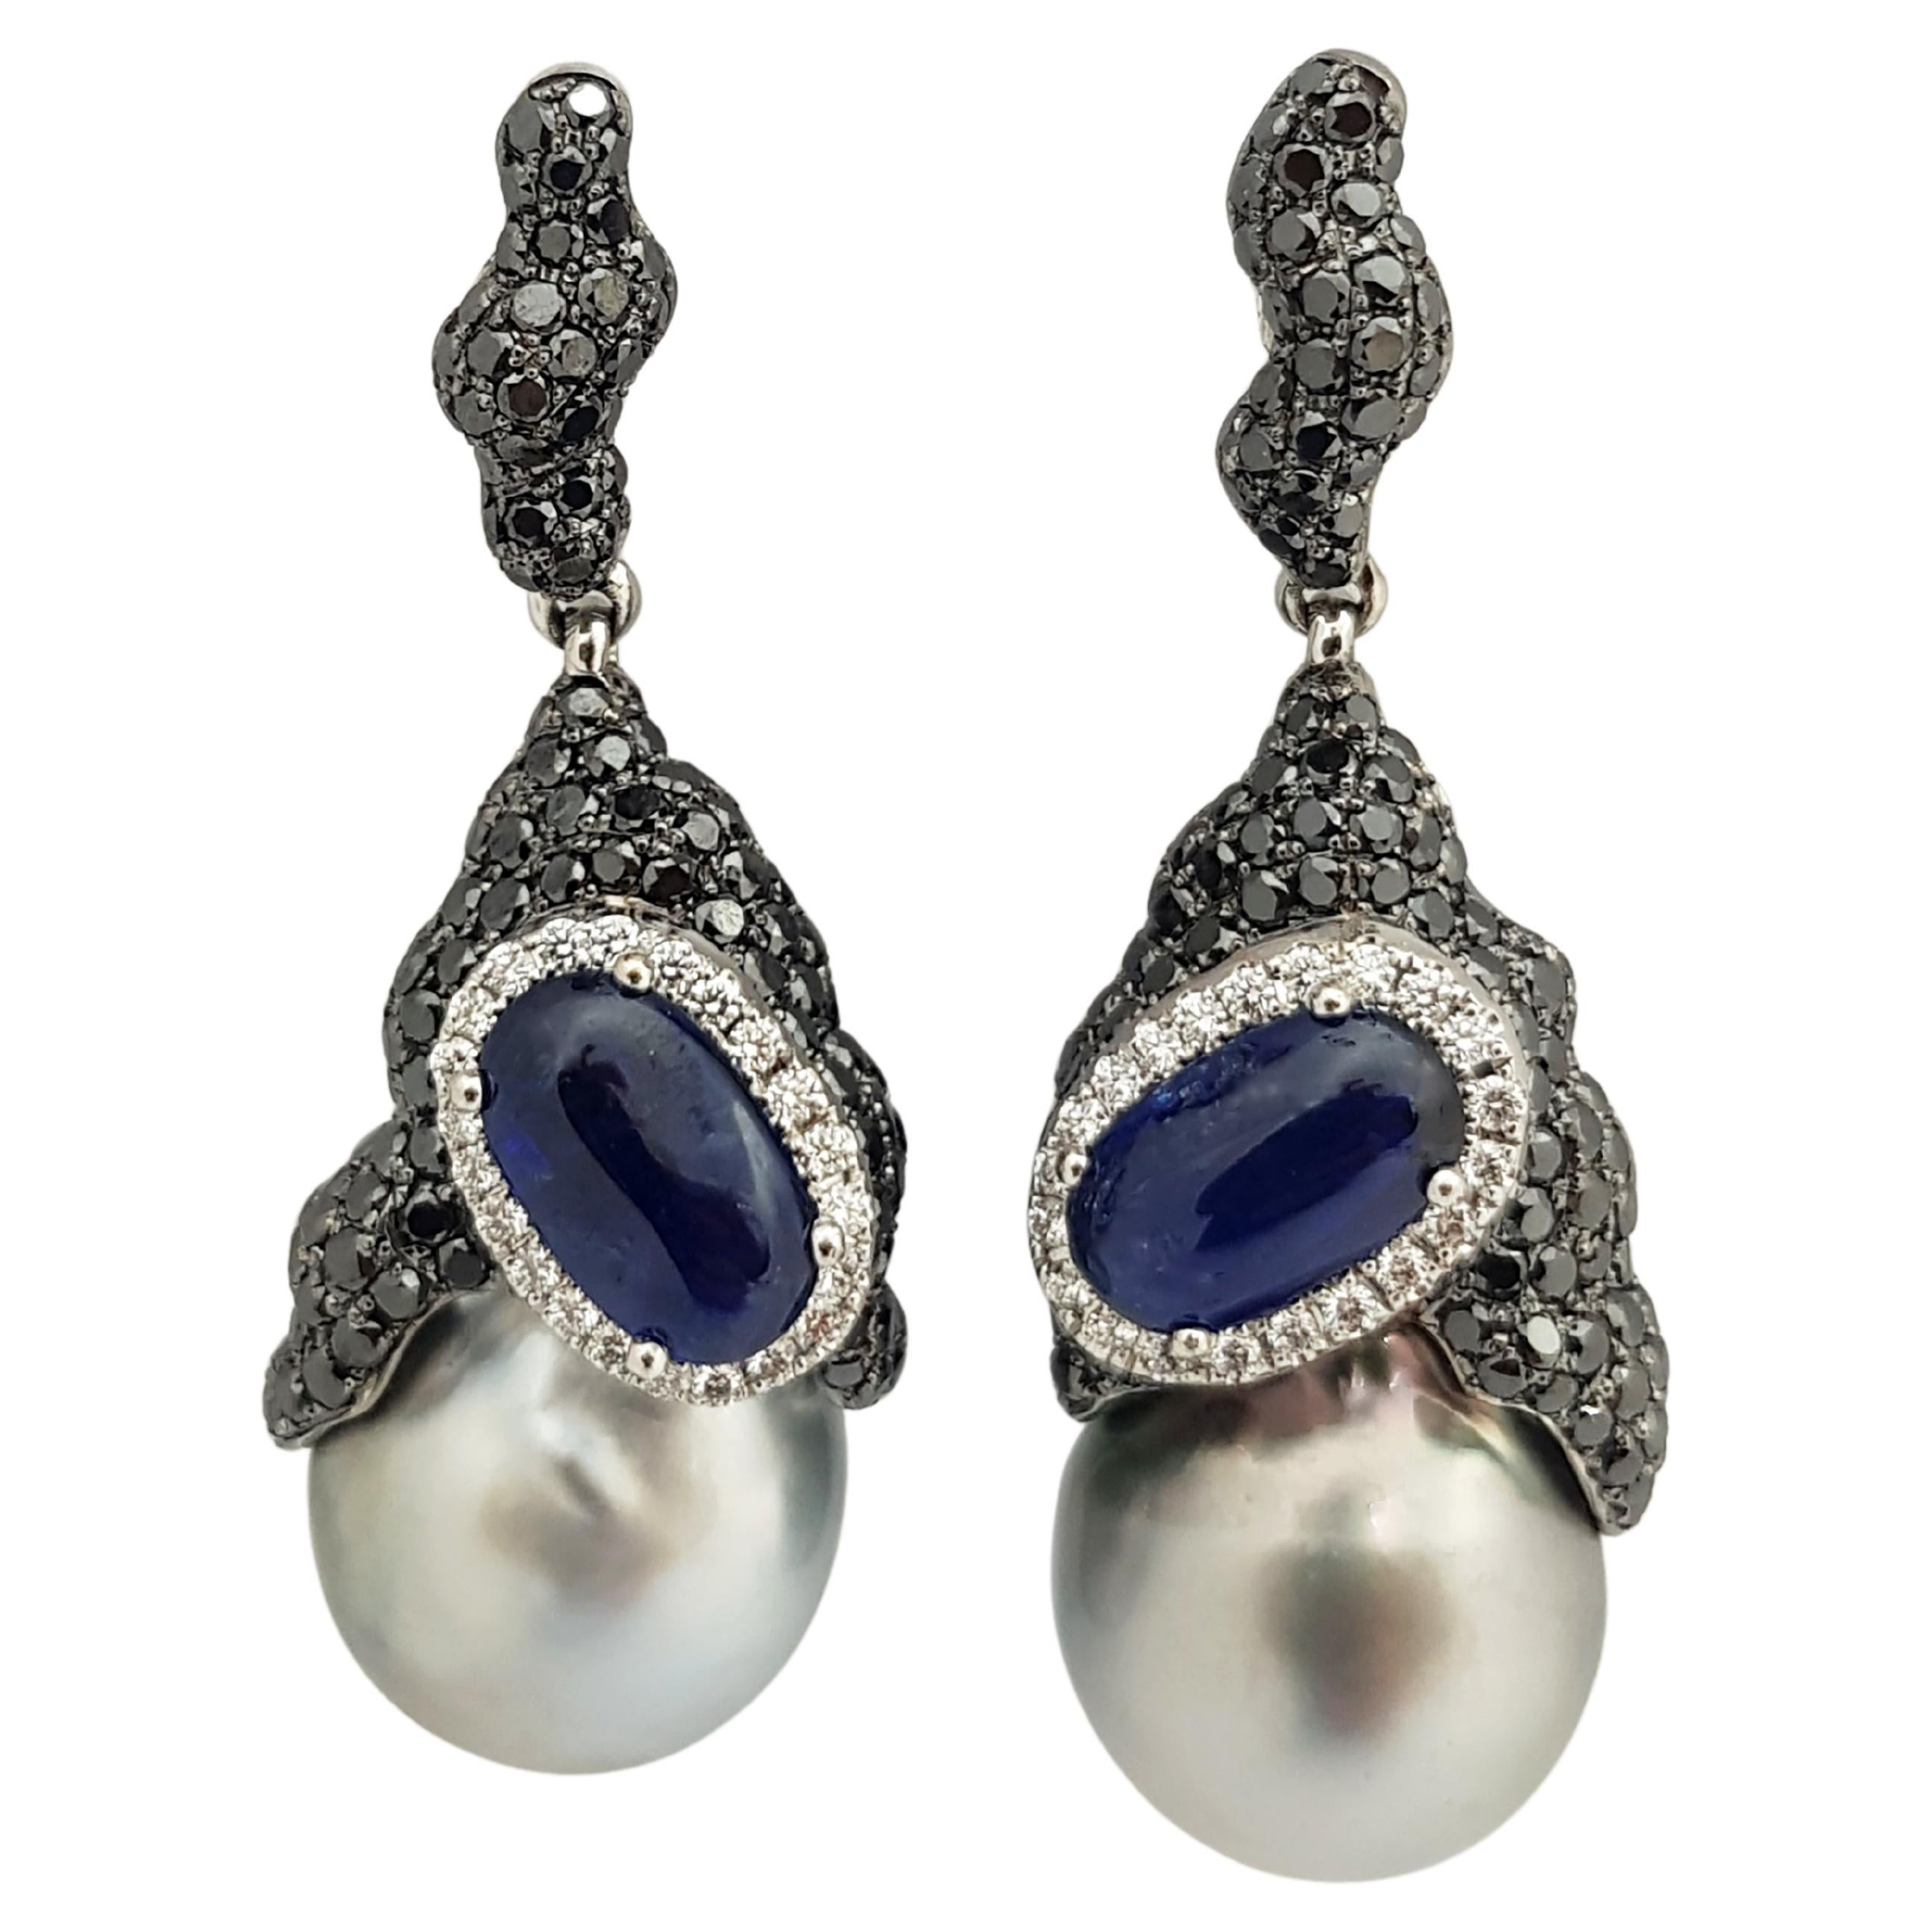 South Sea Pearl, Blue Sapphire, Black Diamond Earrings in 18 Karat White Gold